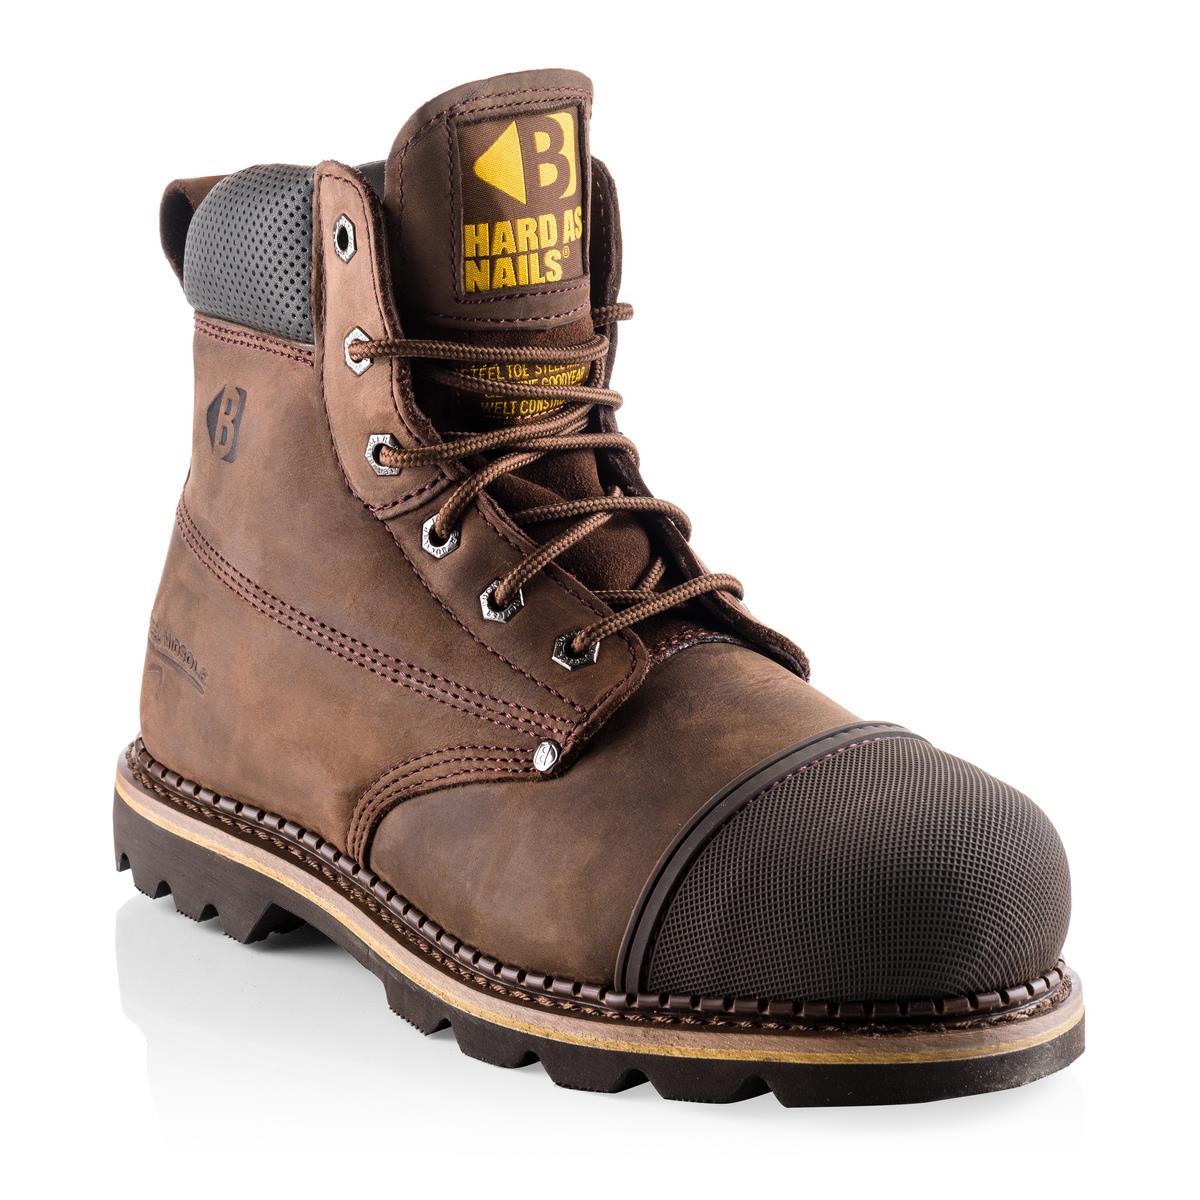 Buckbootz SBP brown leather steel toe/midsole safety boot #B301SM